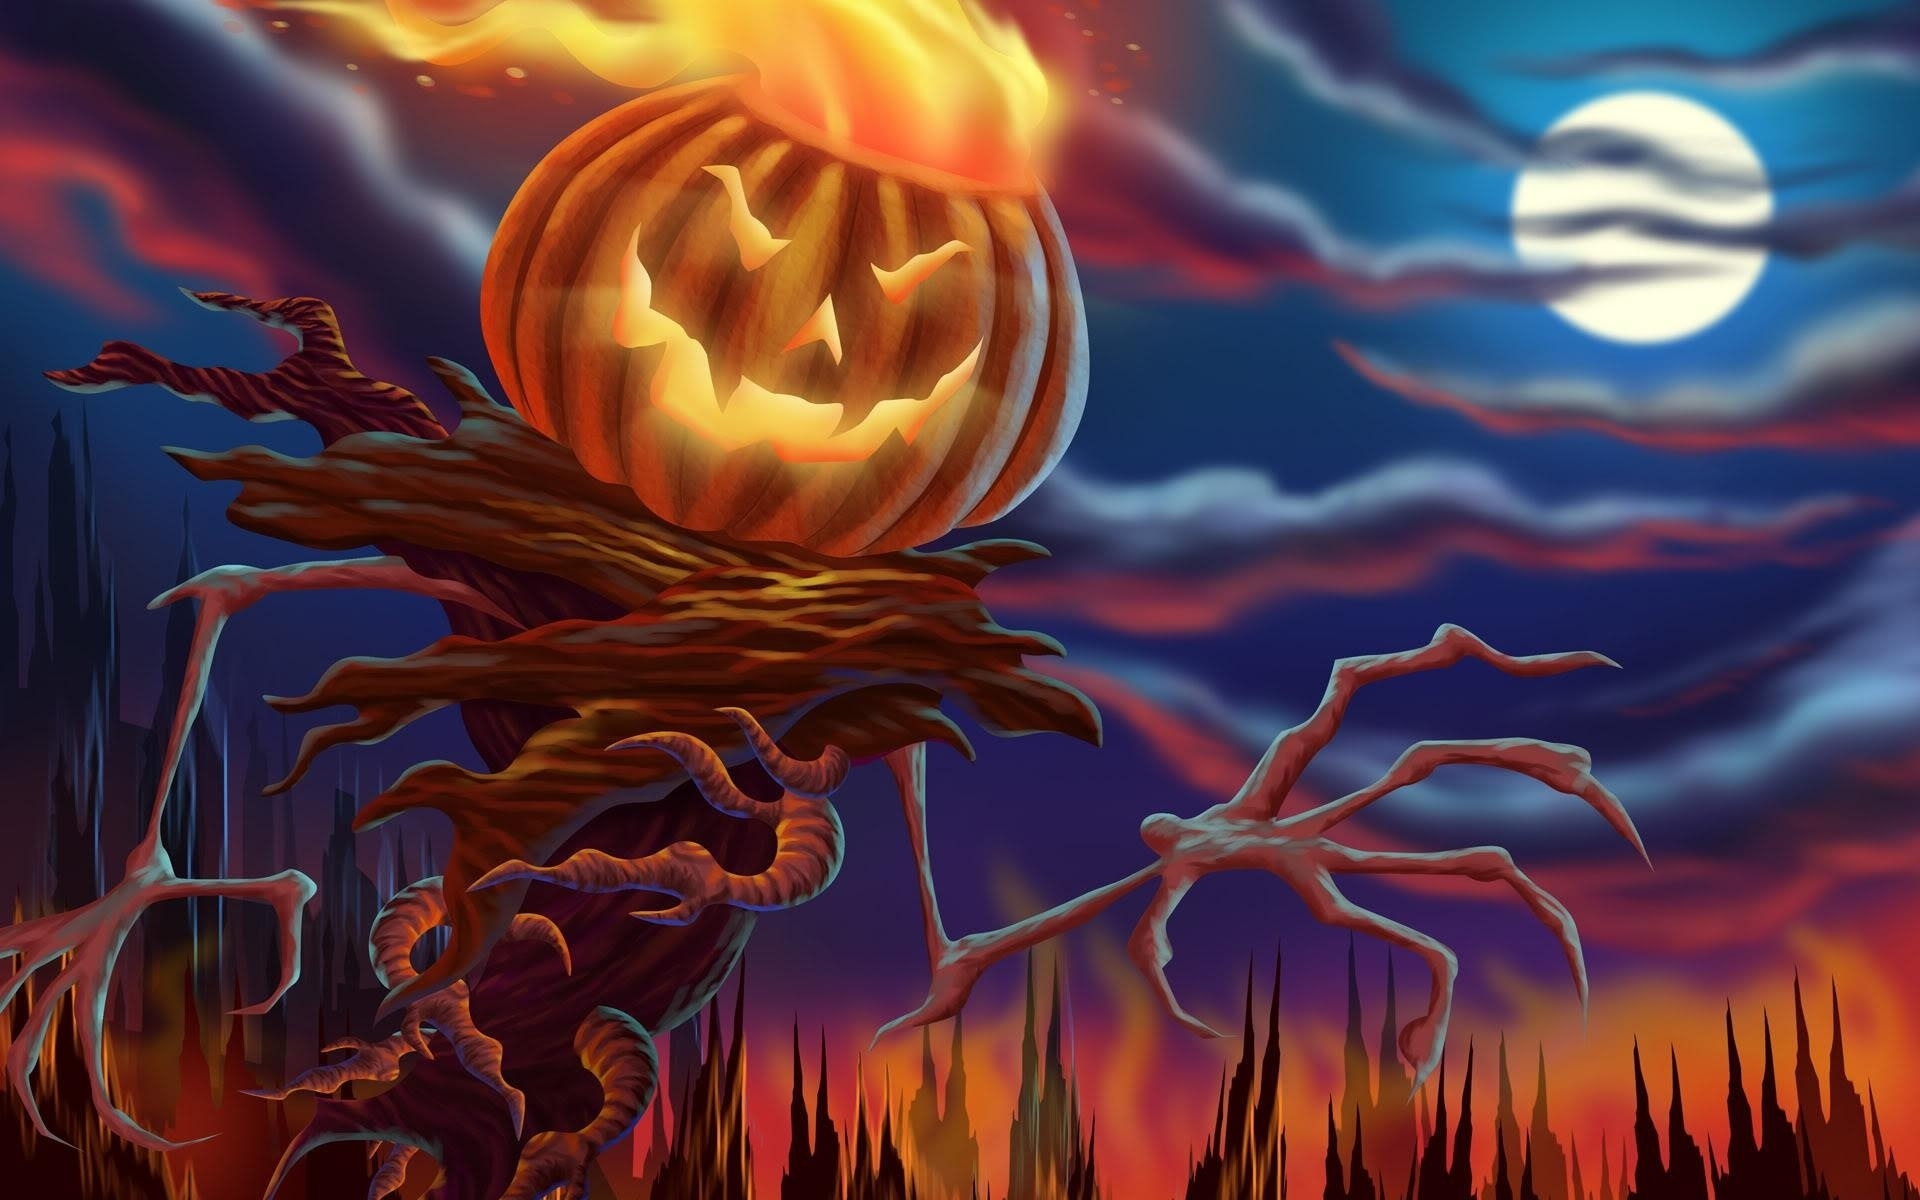 Halloween Digital Illustration for 1920 x 1200 widescreen resolution